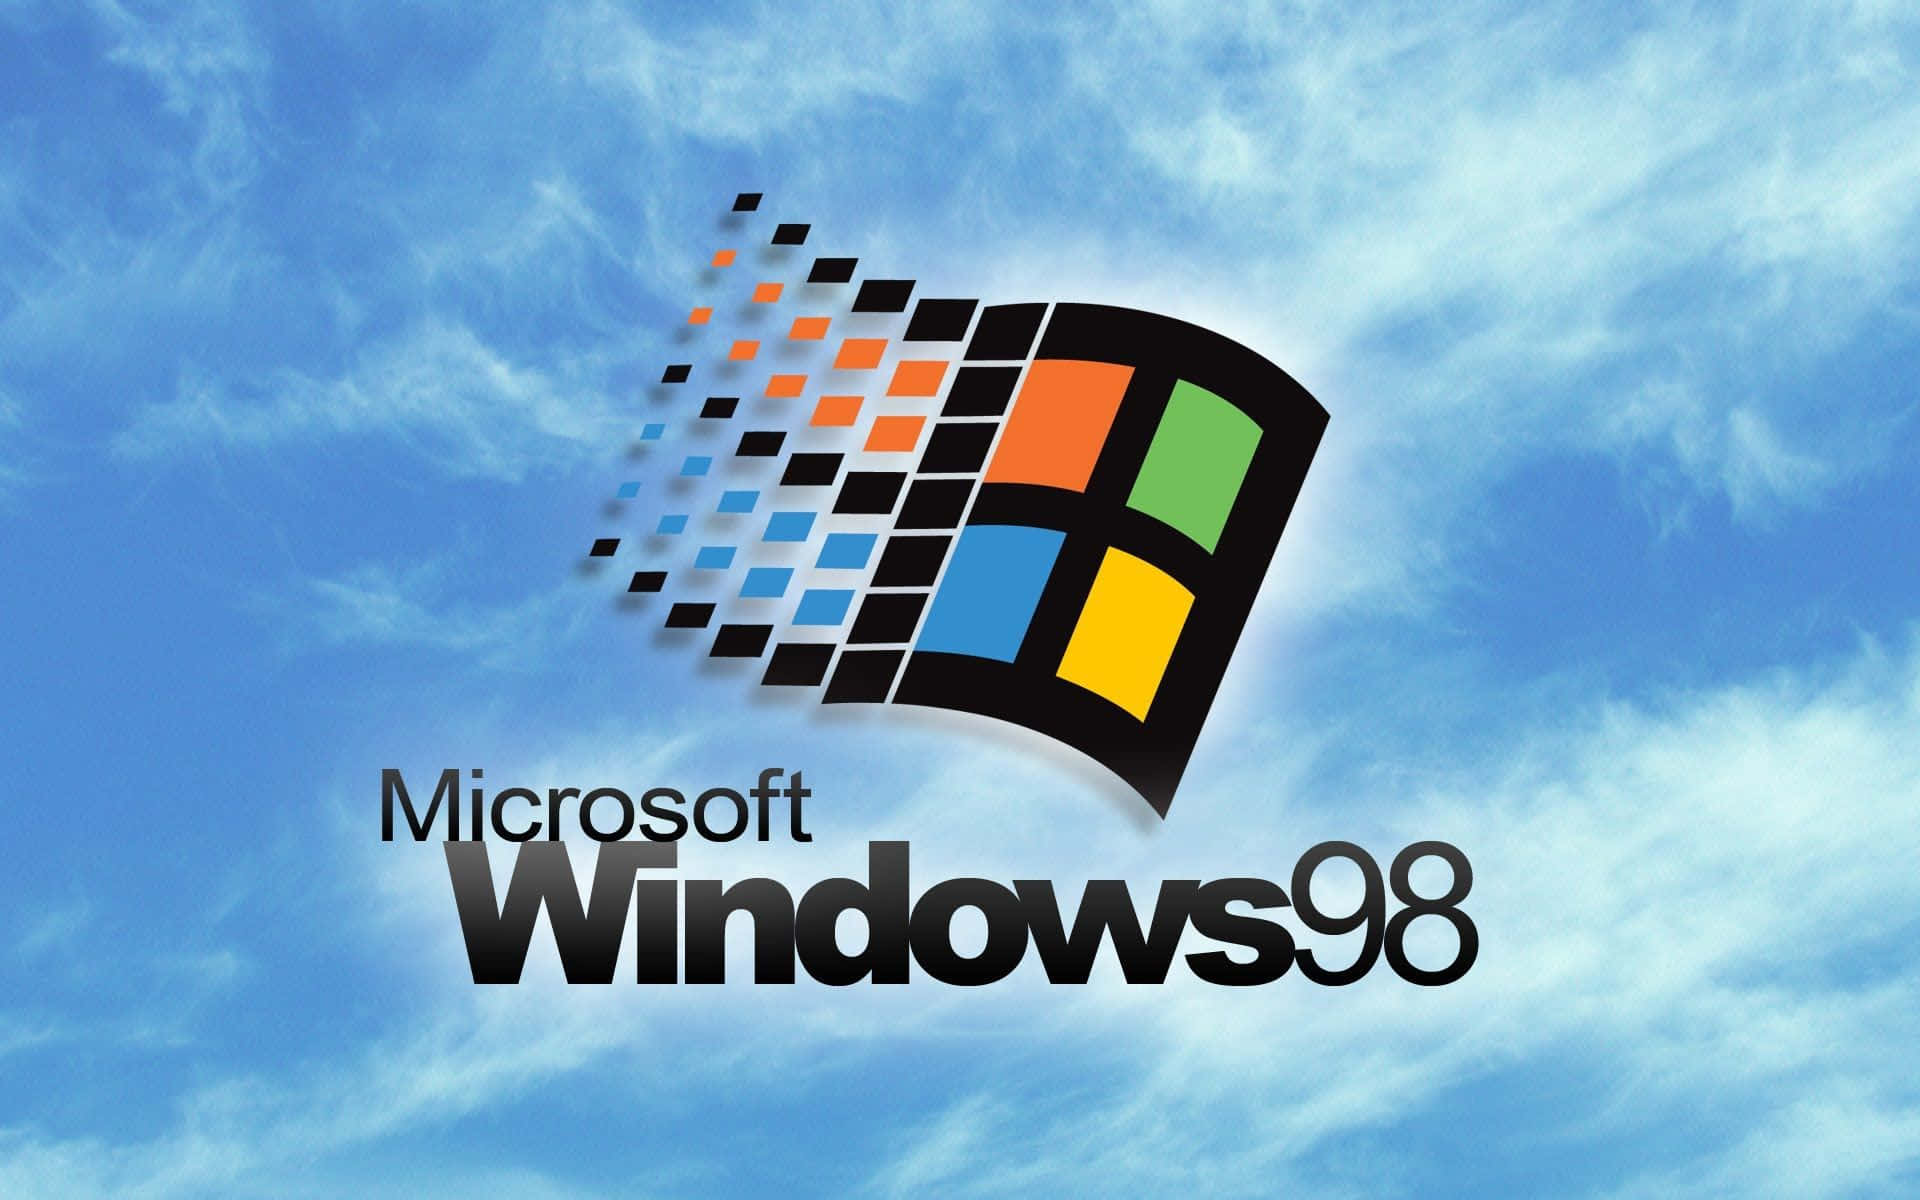 Microsoftwindows 98 Logo På Himlen.